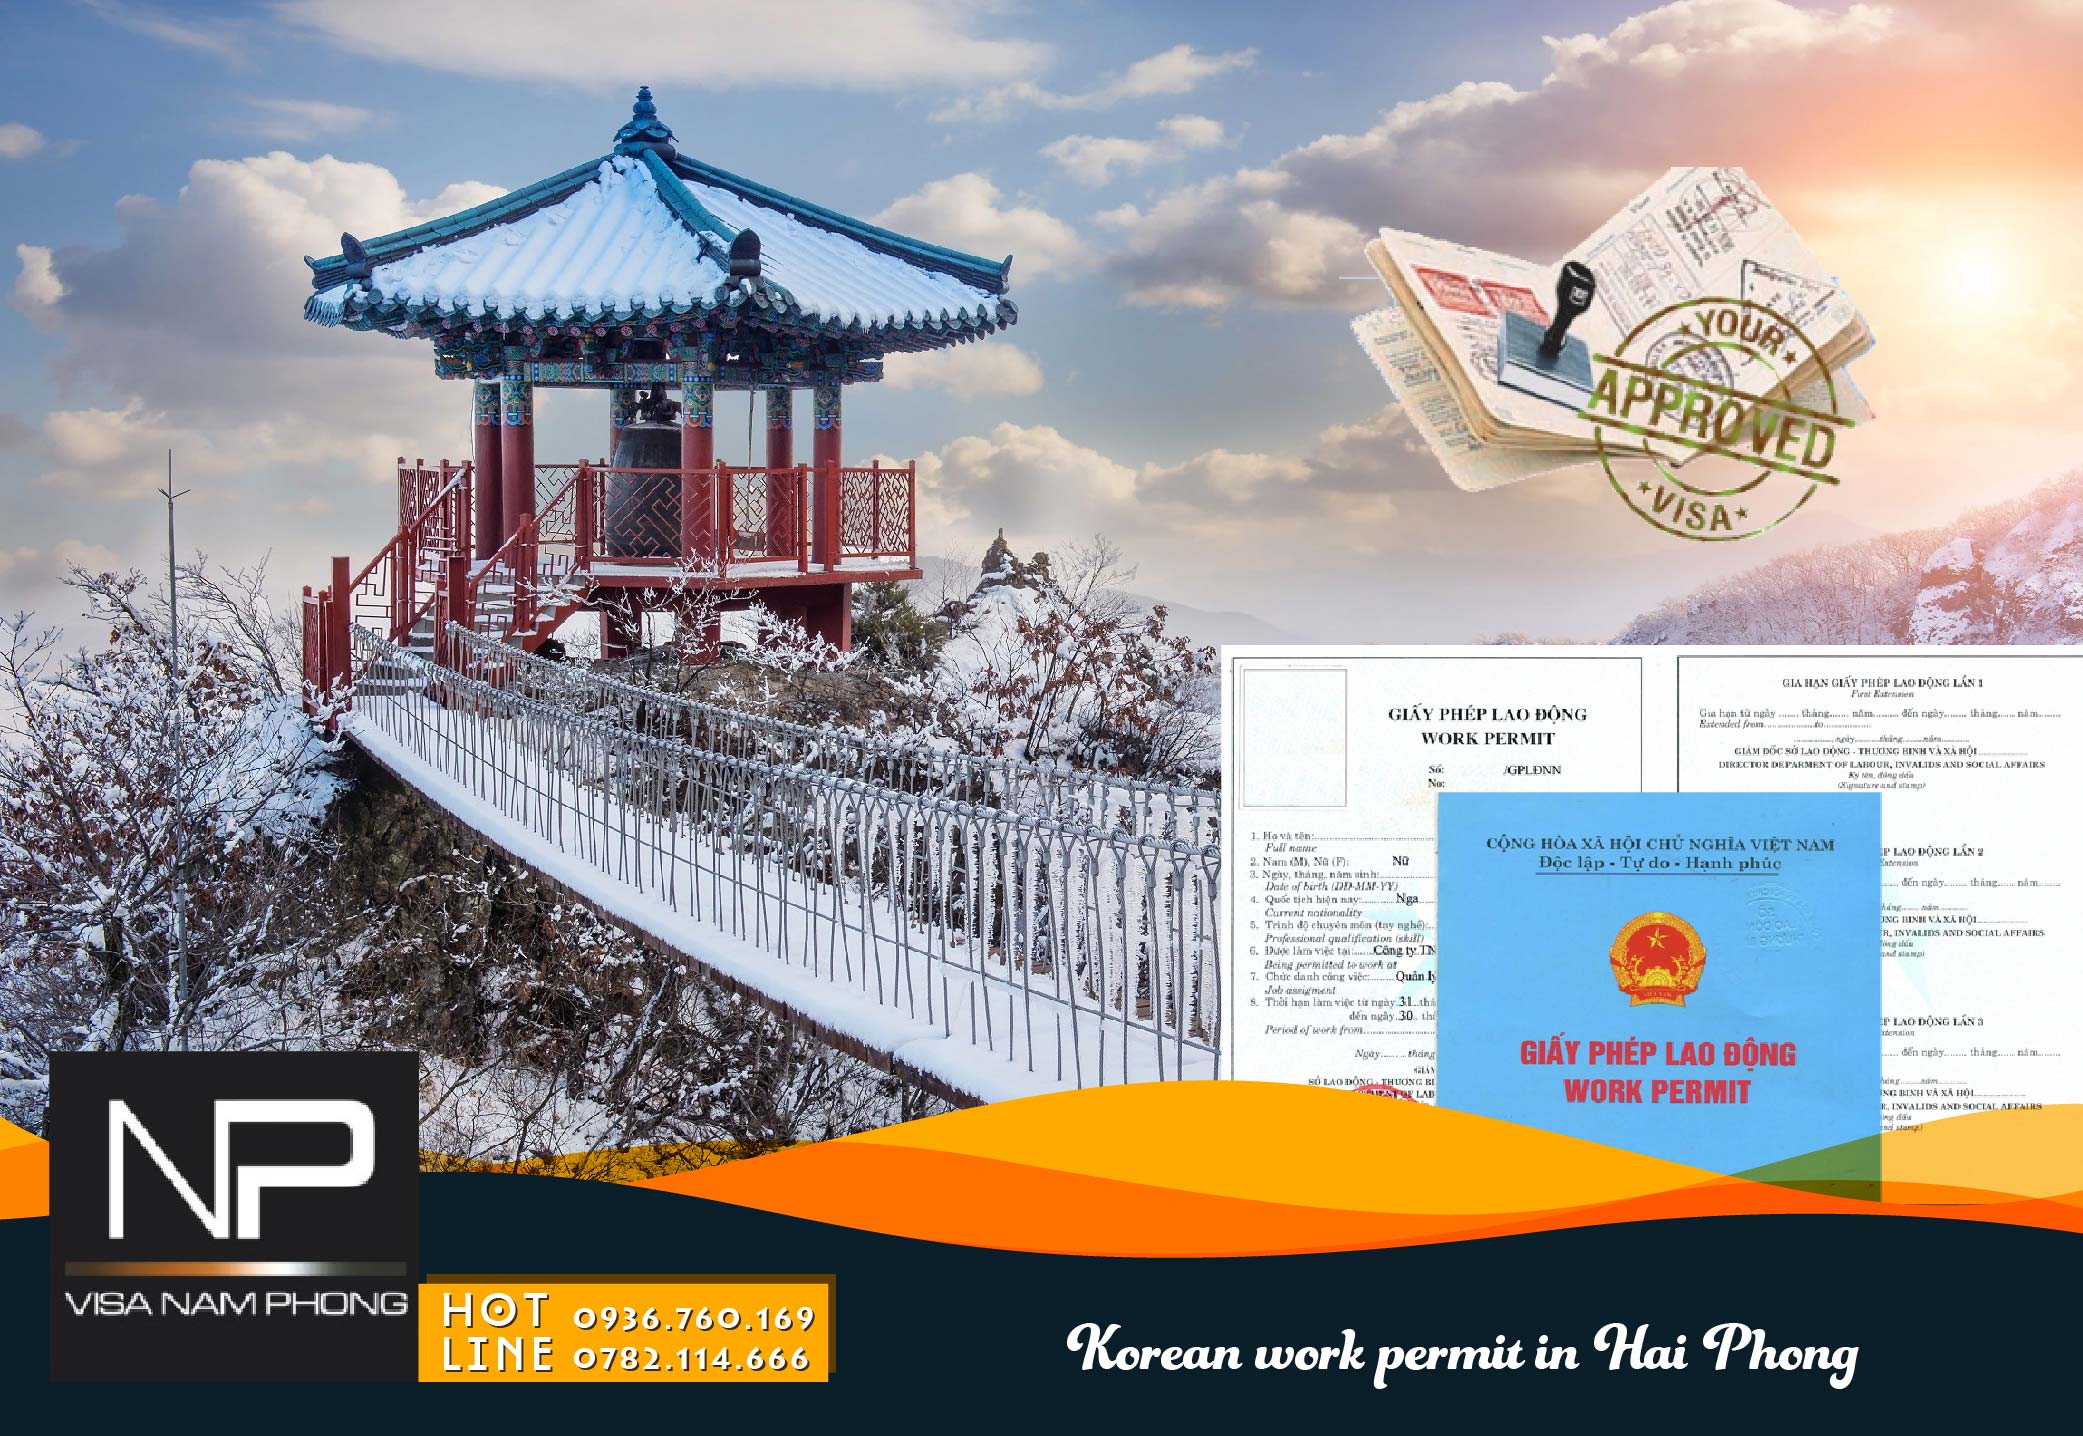 Chinese work permit in Hai Phong